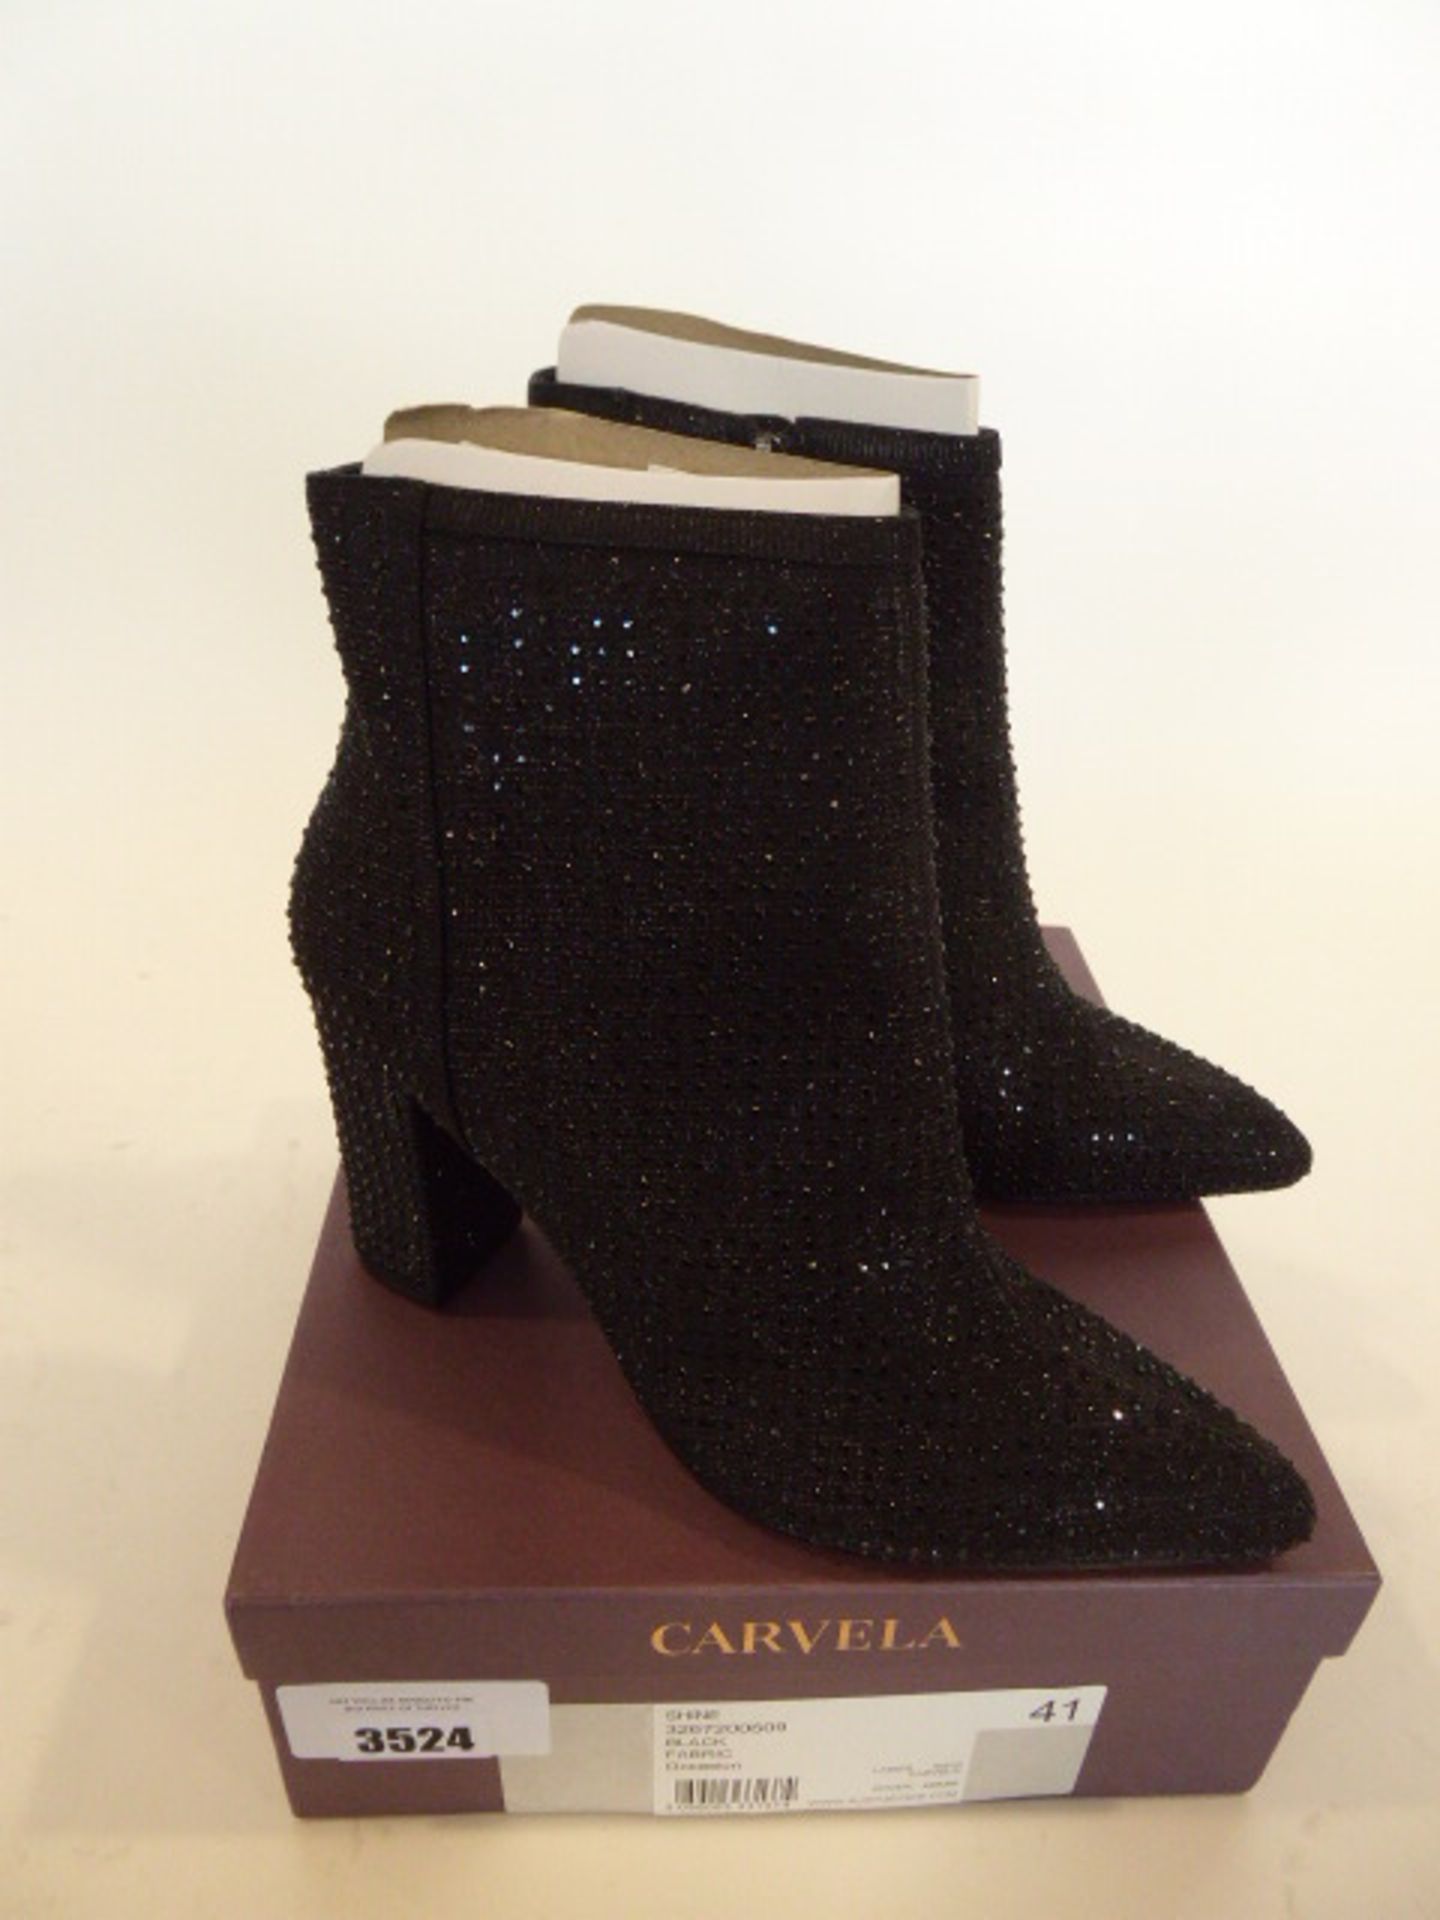 Carvela Shine boots size EU 41 - Image 2 of 3